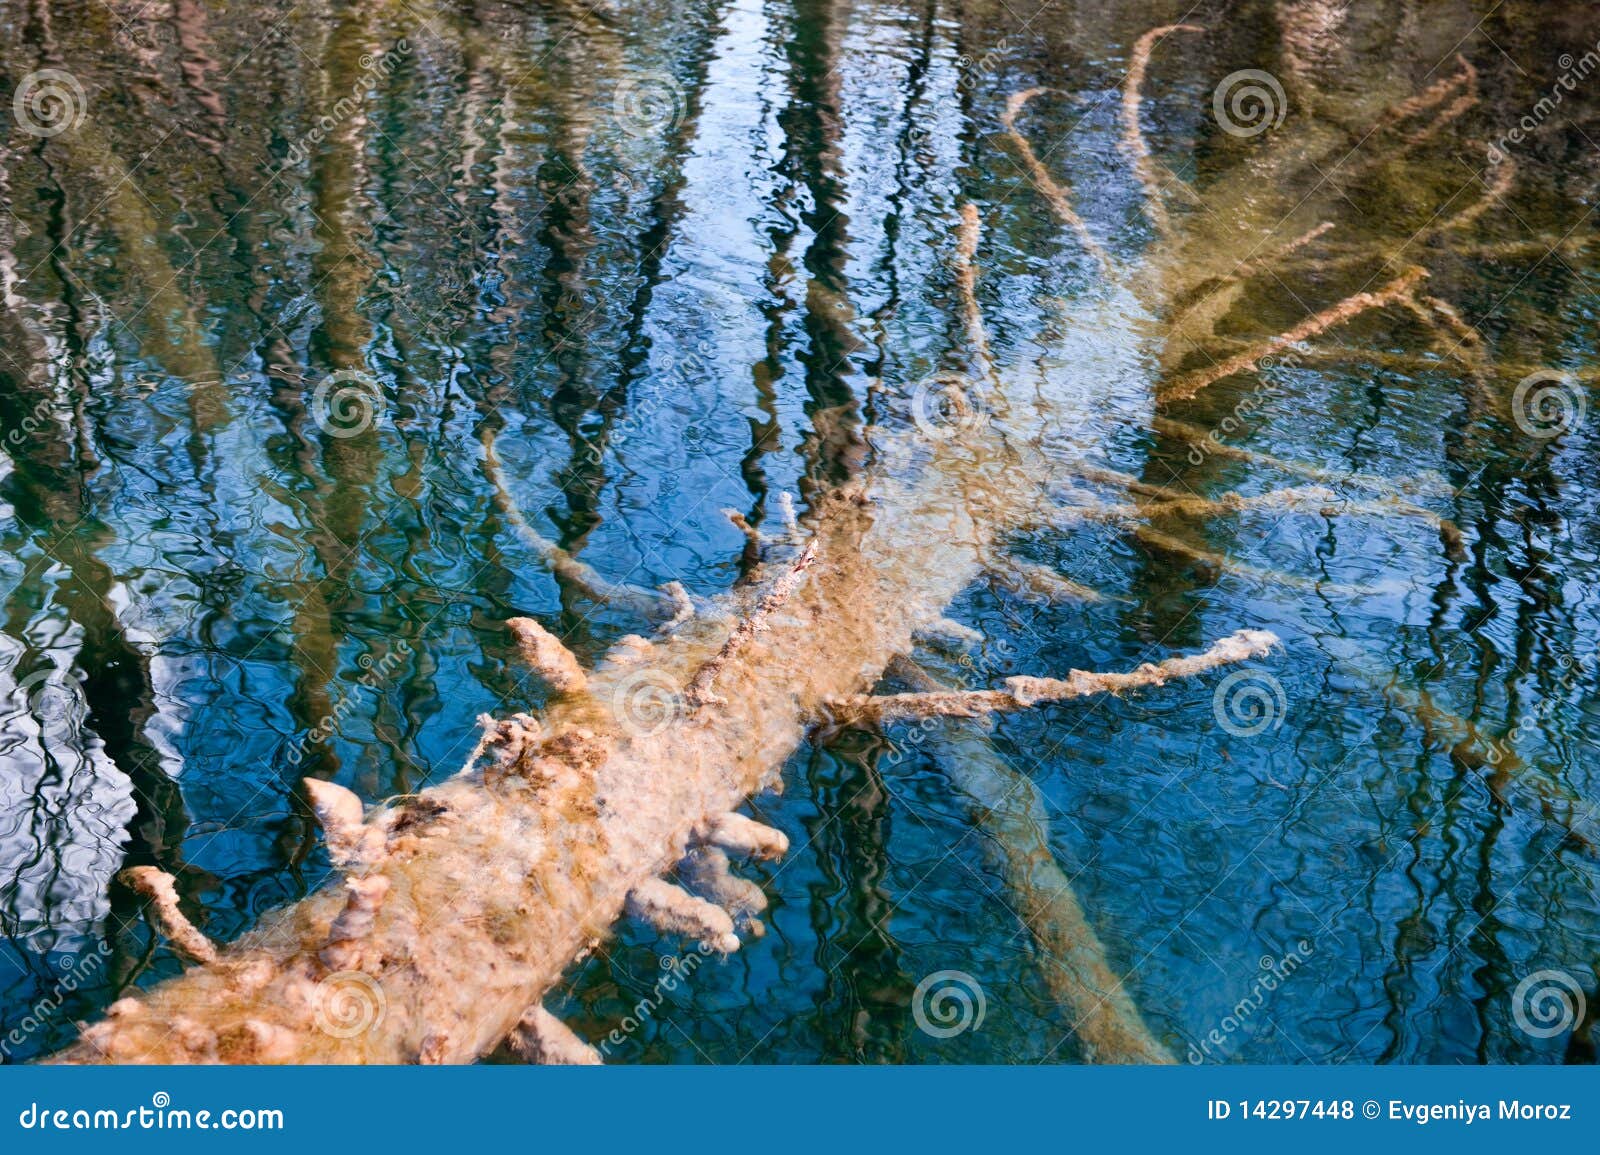 a tree sunk in water